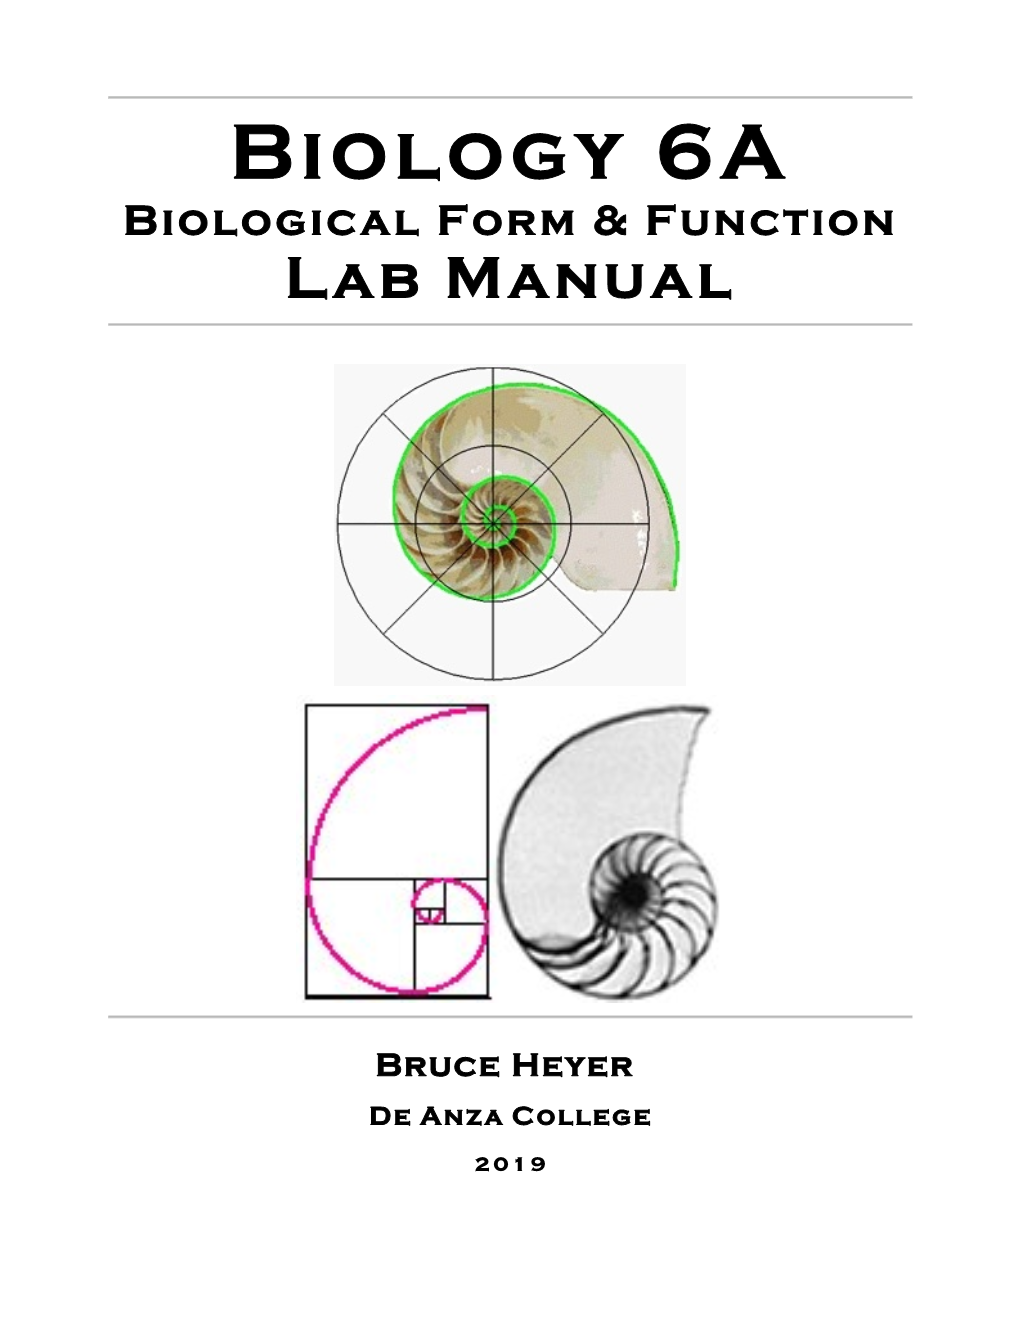 Biology 6A Biological Form & Function Lab Manual